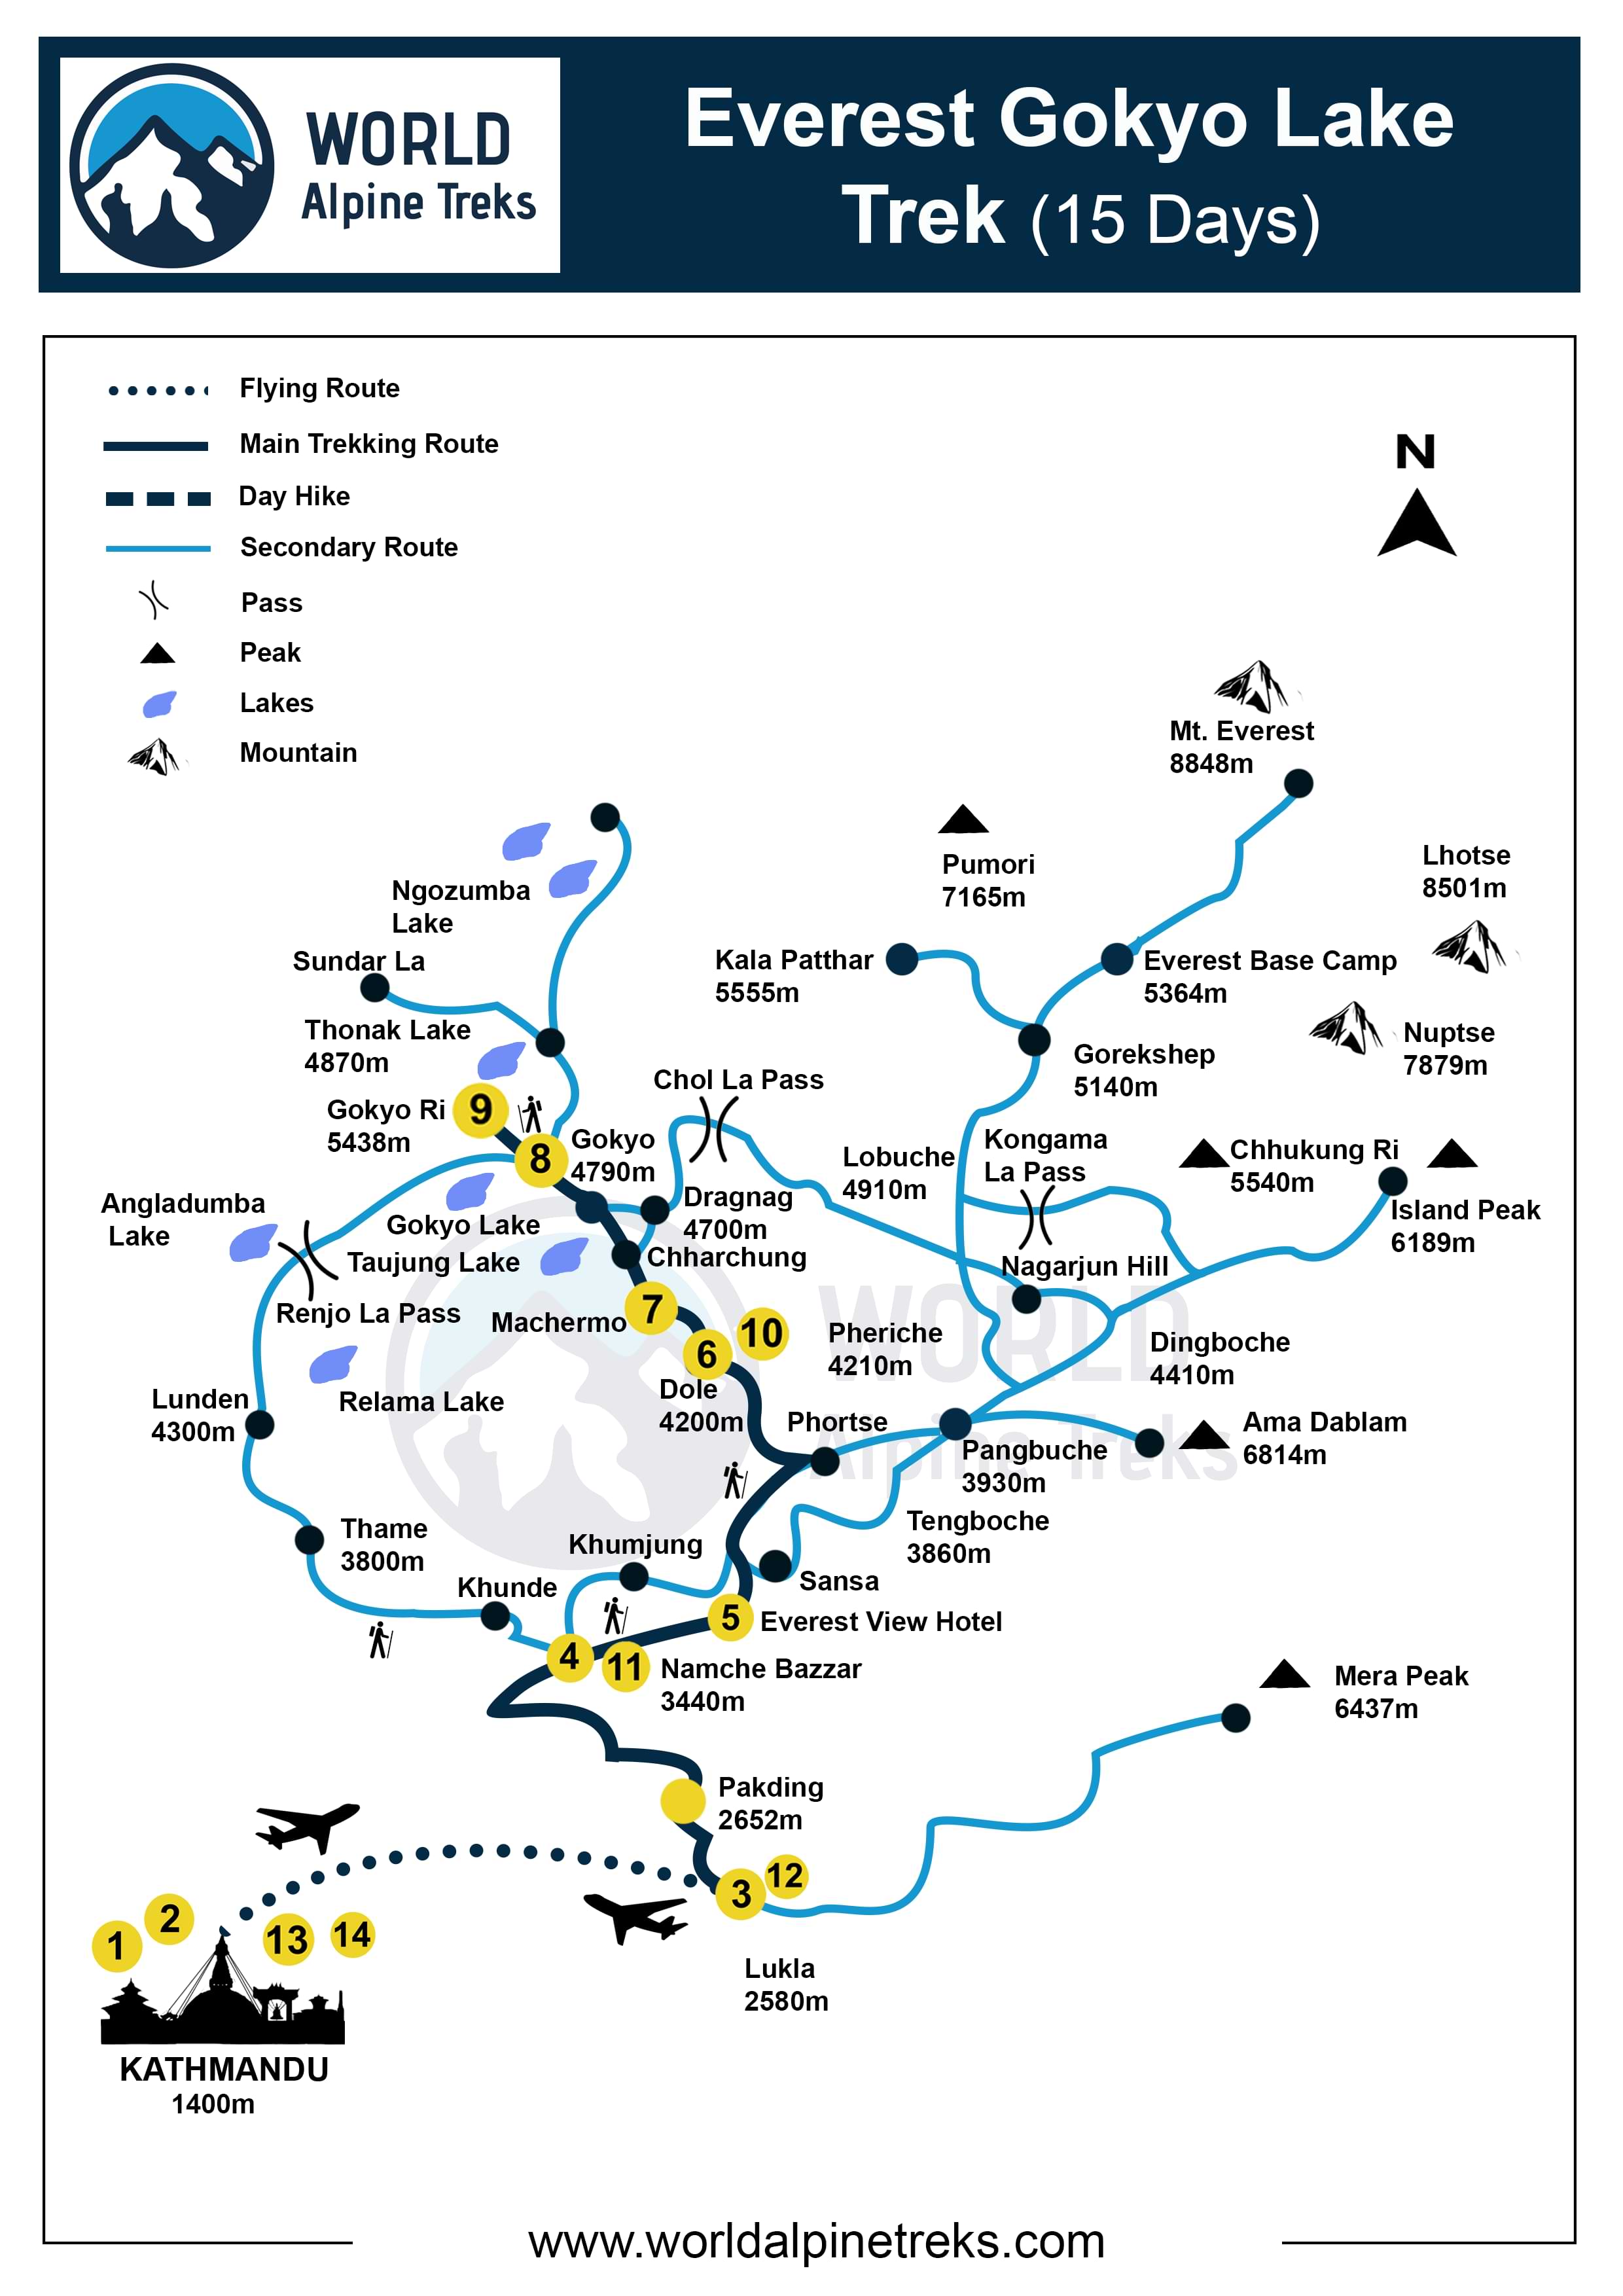 Everest Gokyo Lake Trek Map